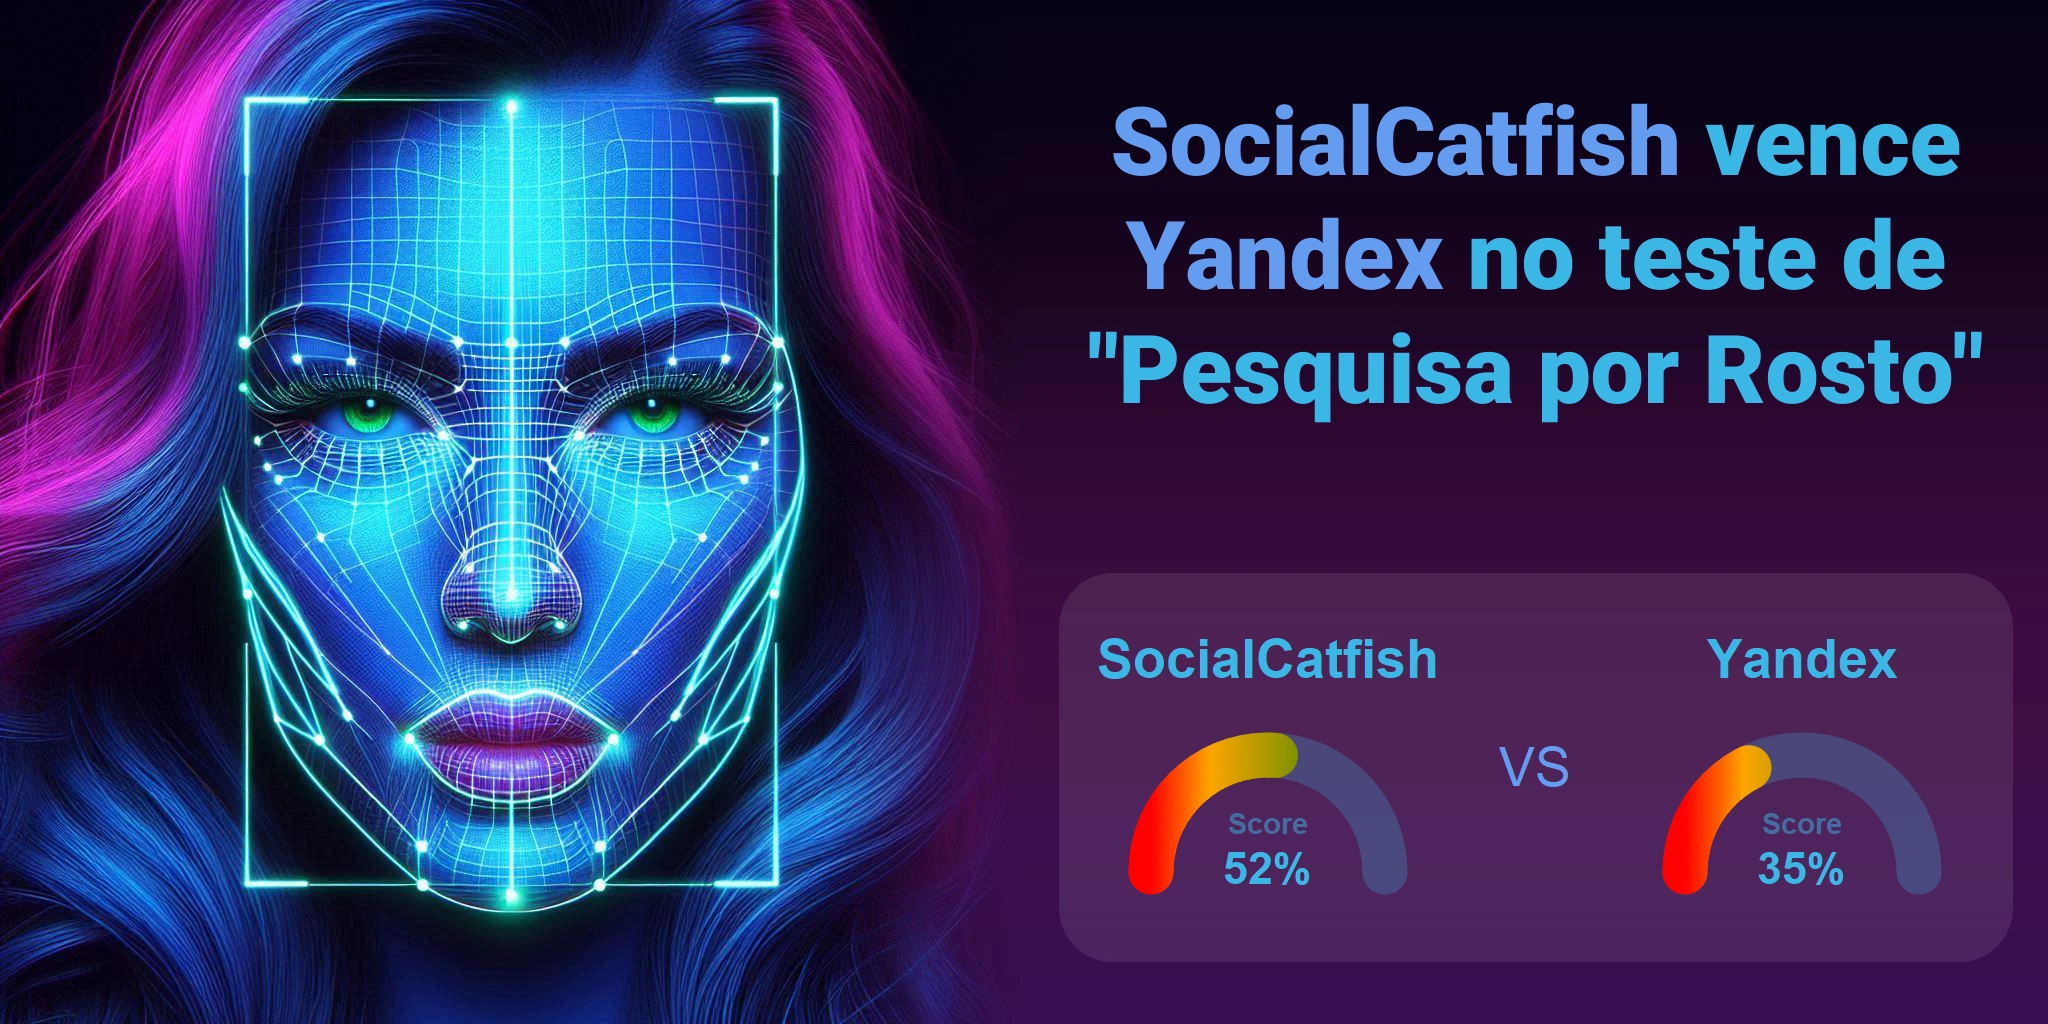 SocialCatfish.com vs Yandex.com